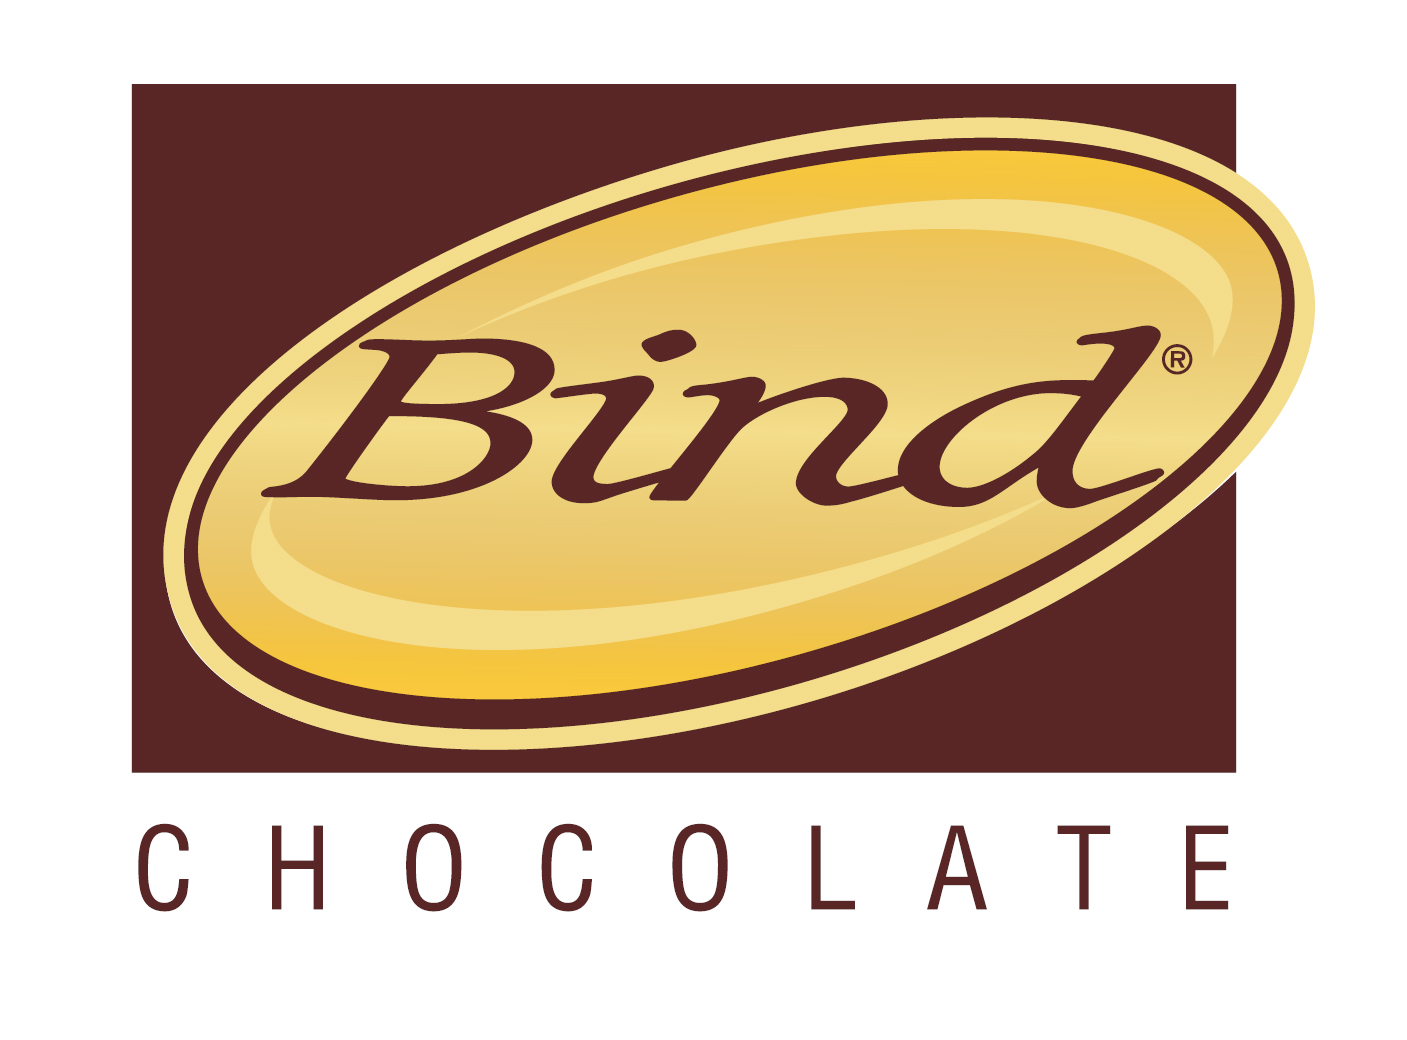 BIND CHOCOLATE